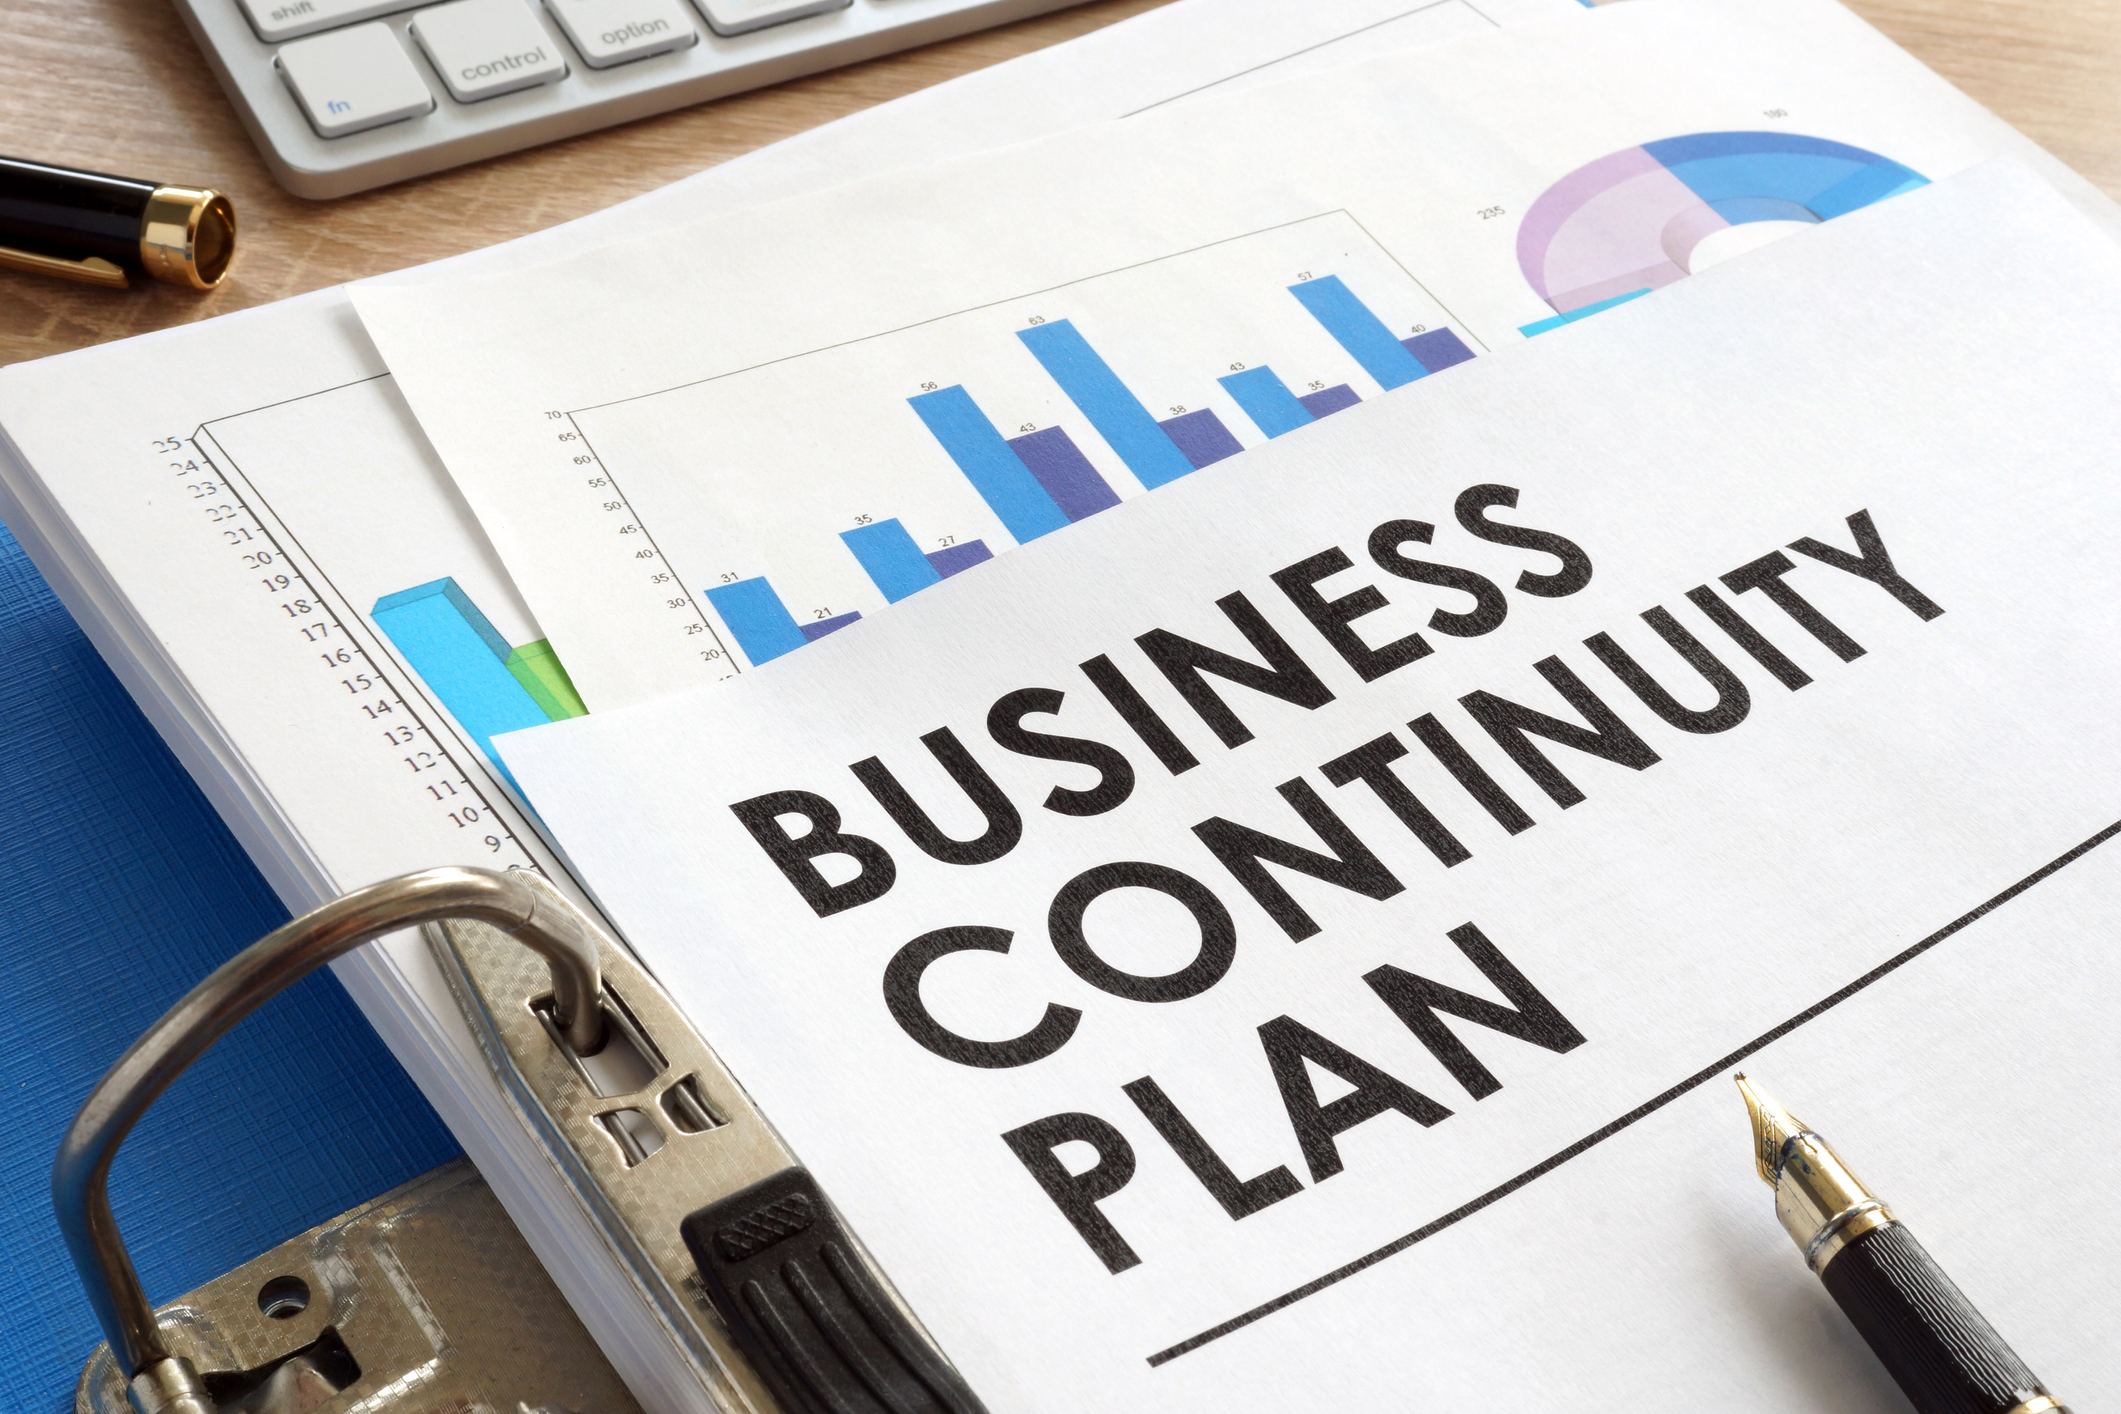 business continuity plan jp morgan